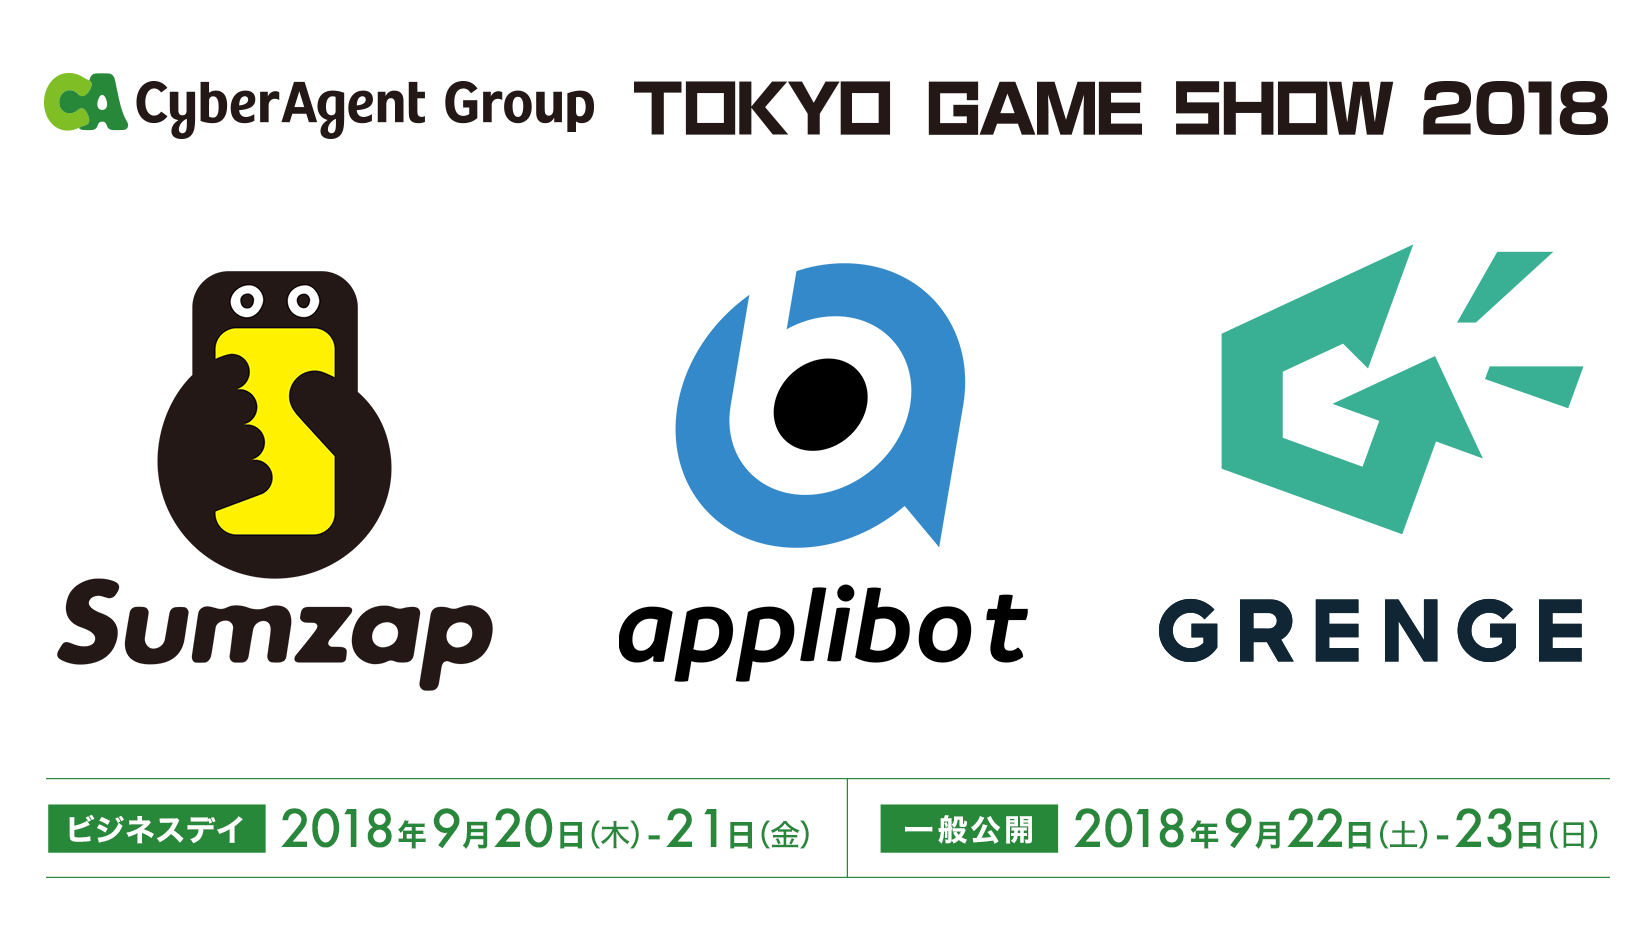 Cyber Agent Group TOKYO GAME SHOW 2018 Sumzap applibot GRENGE